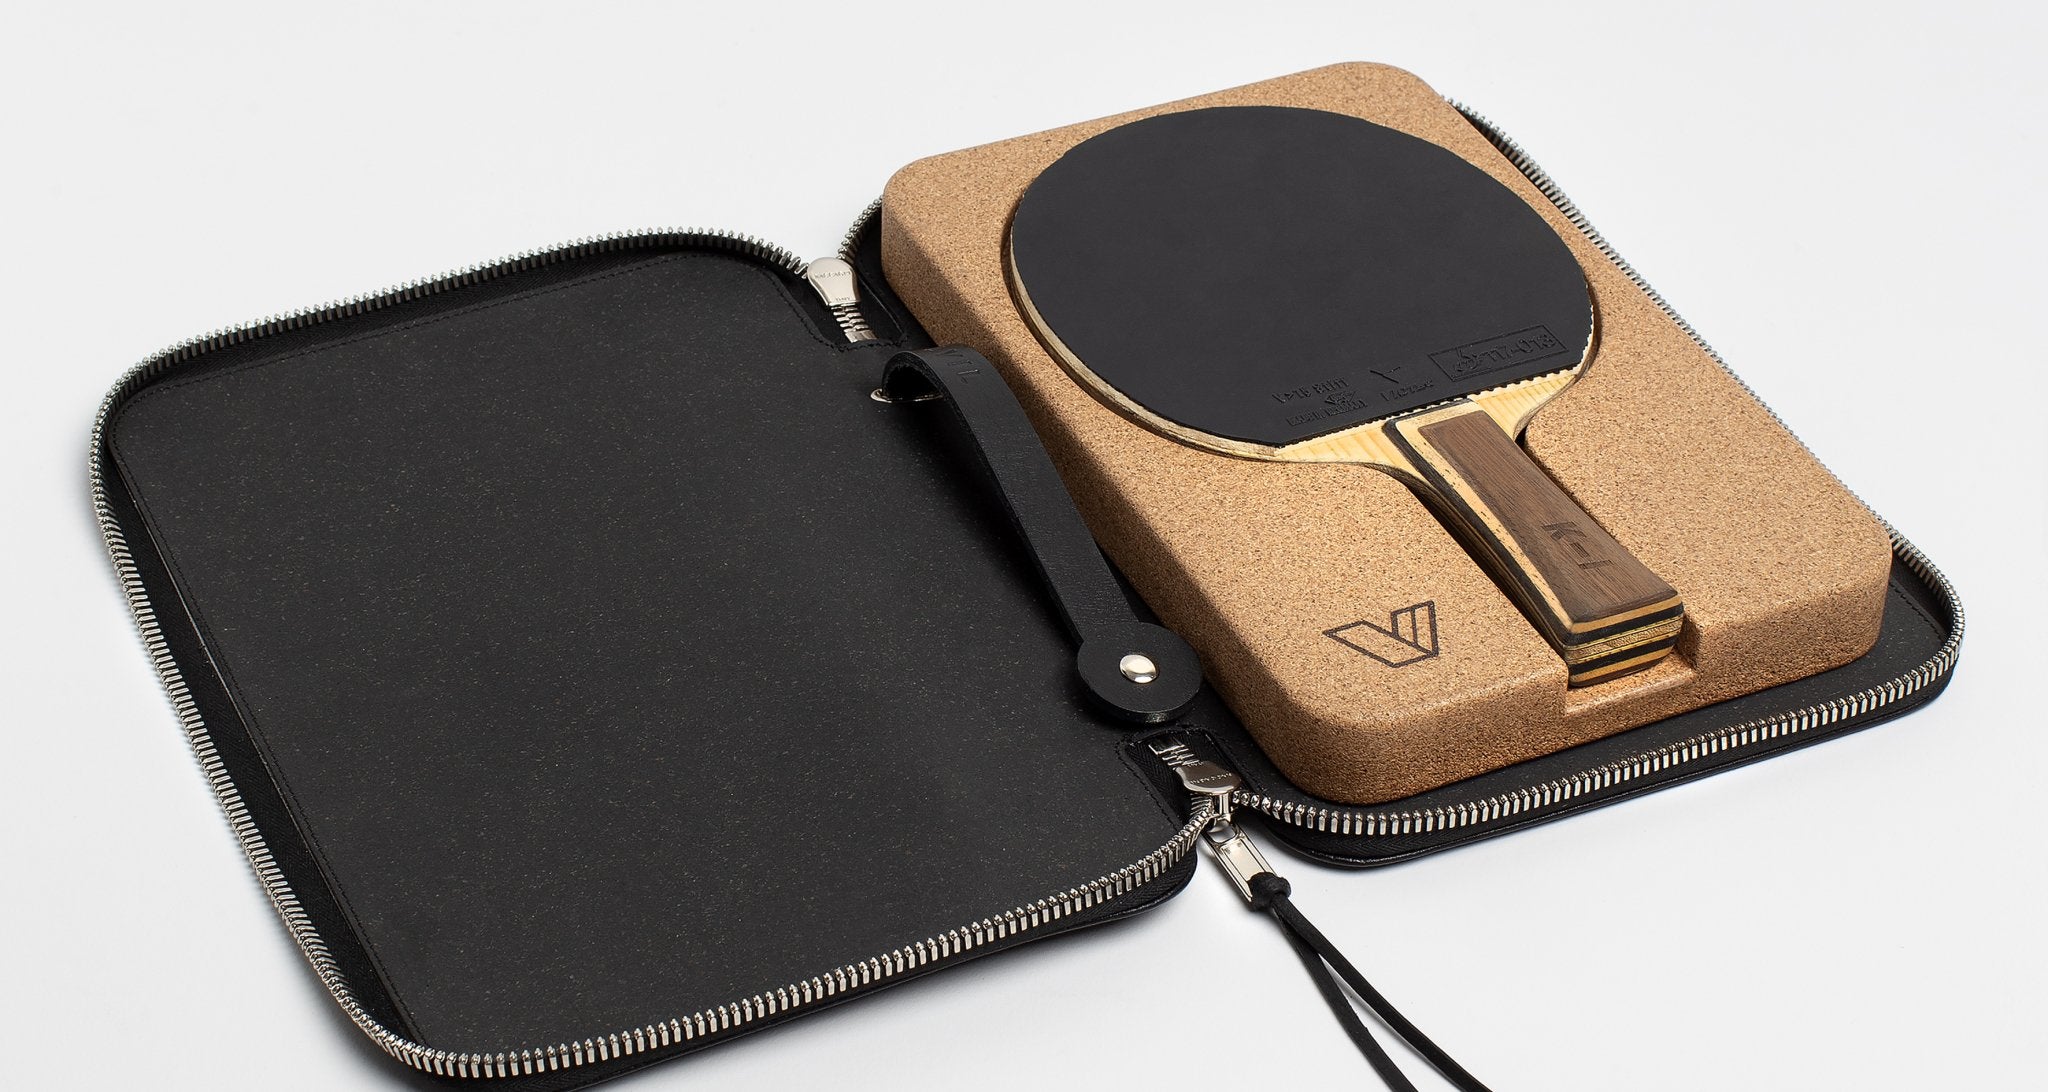 Designer leather table tennis bag interior